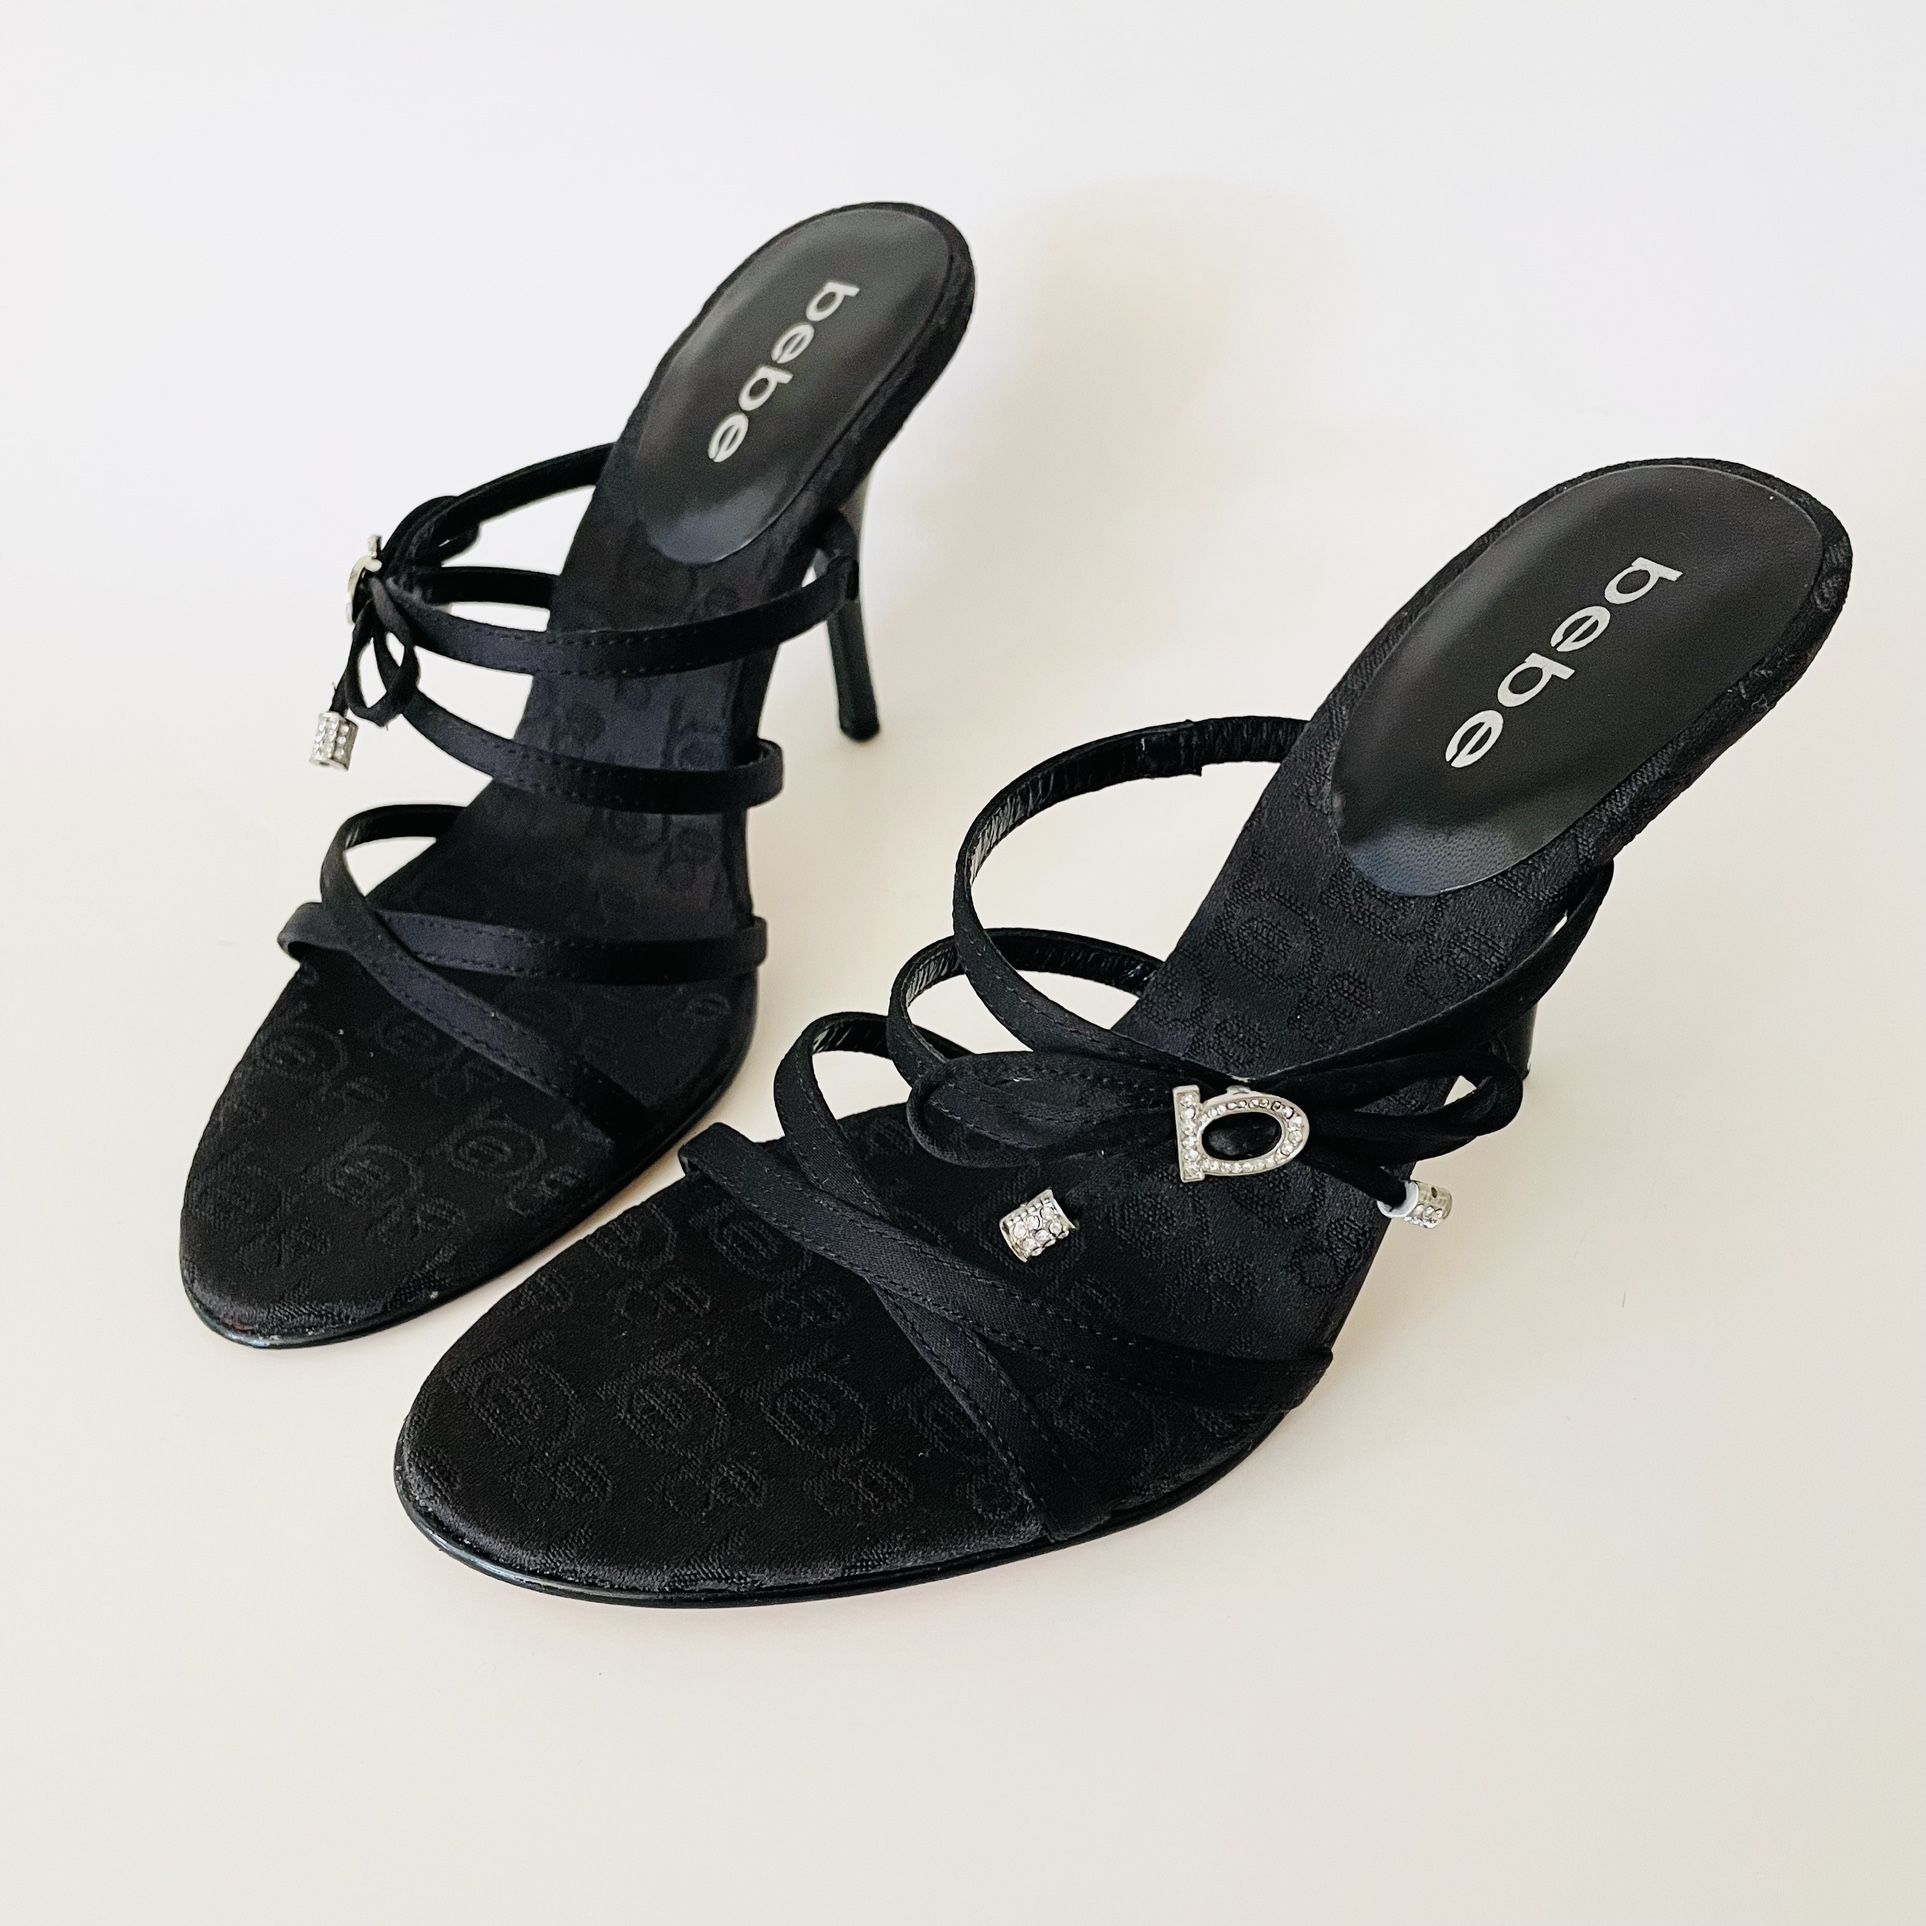 Black Bebe 3.5 Inch High Heel Sandals Like New